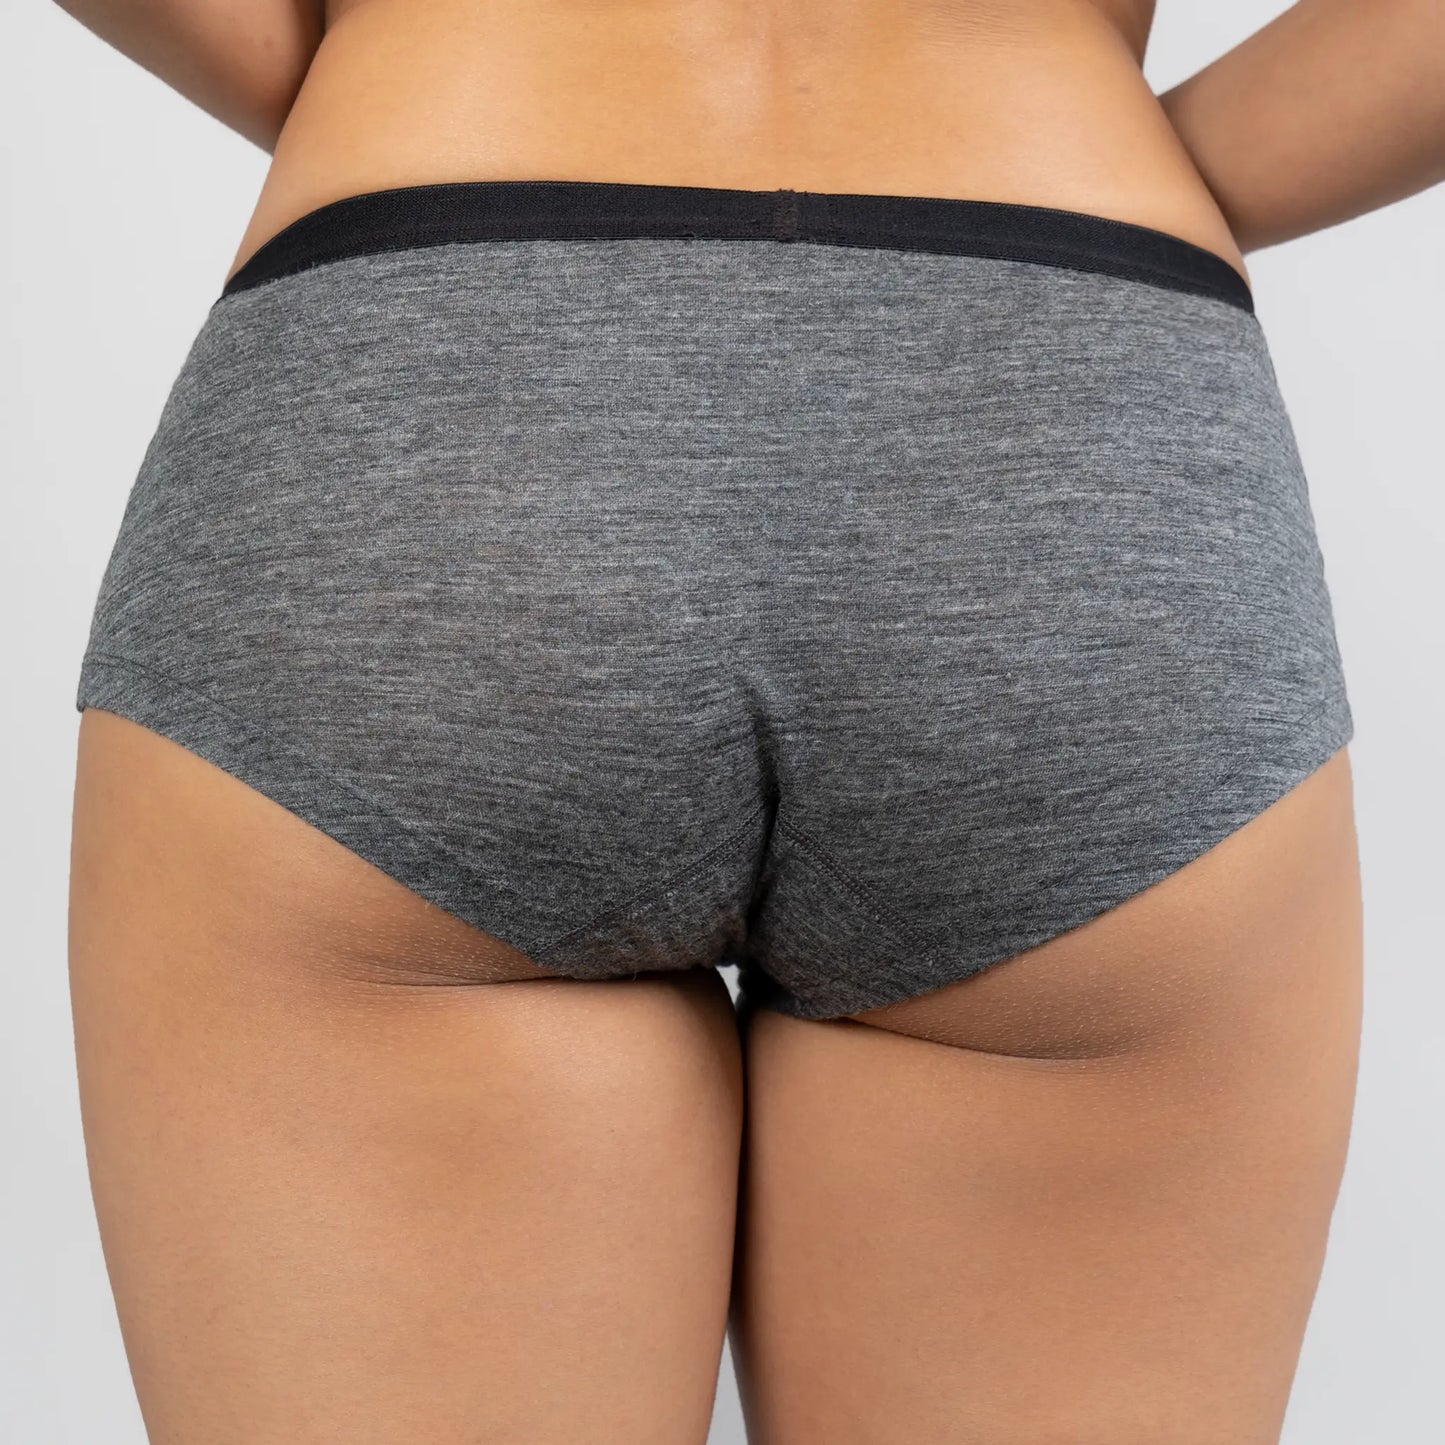  womens thermal wool panties ultralight color gray